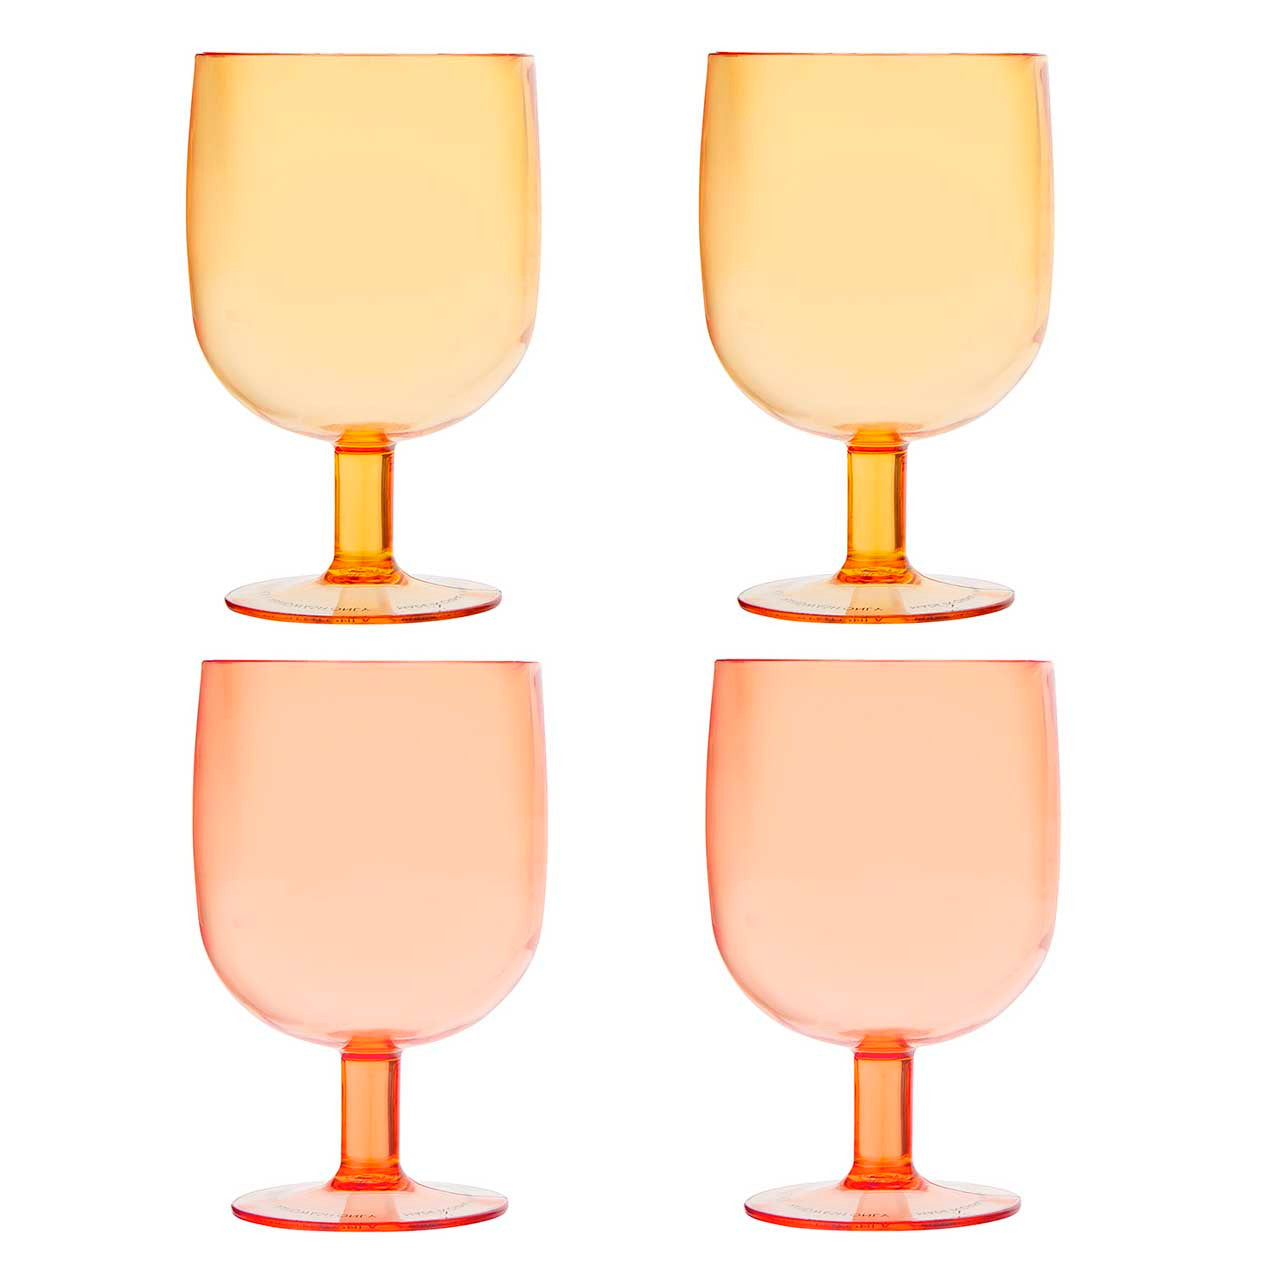 PINK/ORANGE ACRYLIC WINE GLASS